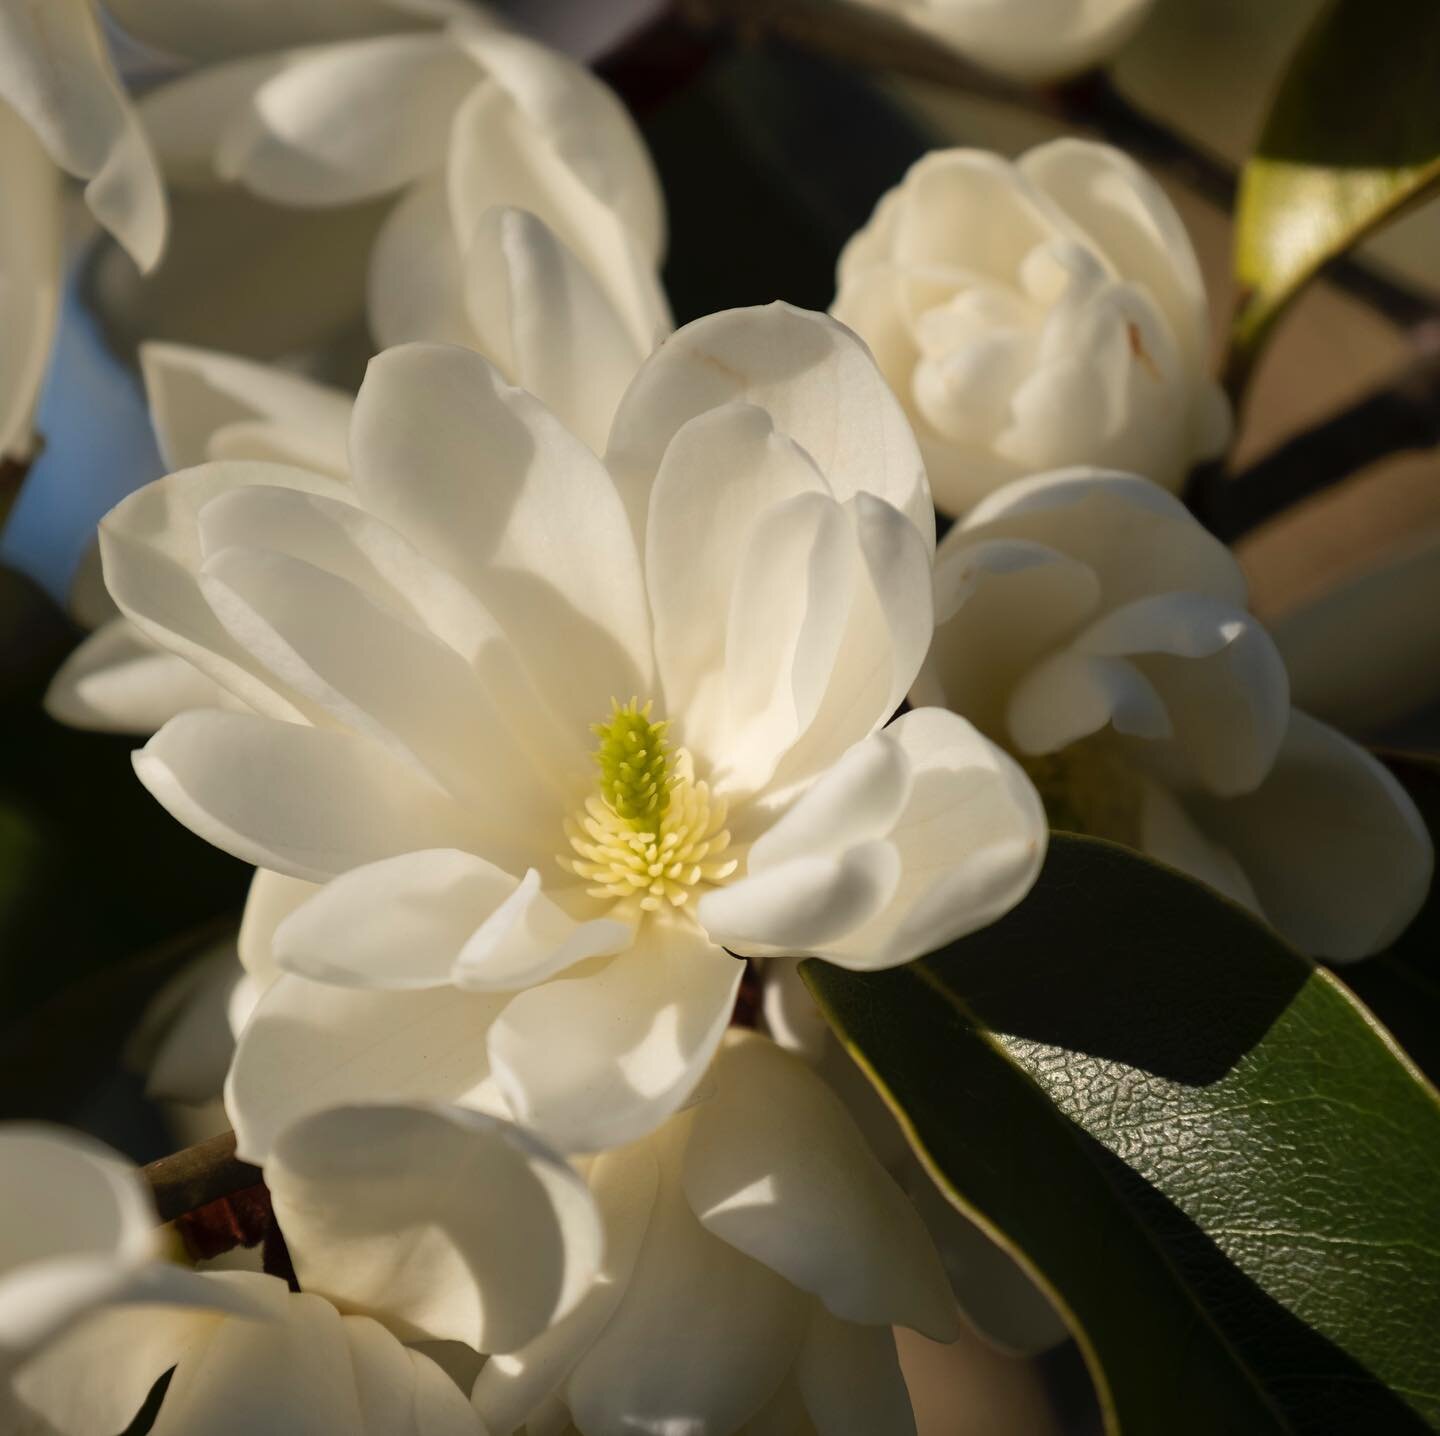 Aren&rsquo;t magnolias just about the dreamiest flowers in the garden right now? Be still my 💙

.
.
. 
.
#myfujilove #FujifilmX_US #FujifilmX_Seattle #fujifilm #fujifilmxt3 #fujifilm_northamerica #earthdayeveryday #gardens #botanicalgardens #magnoli